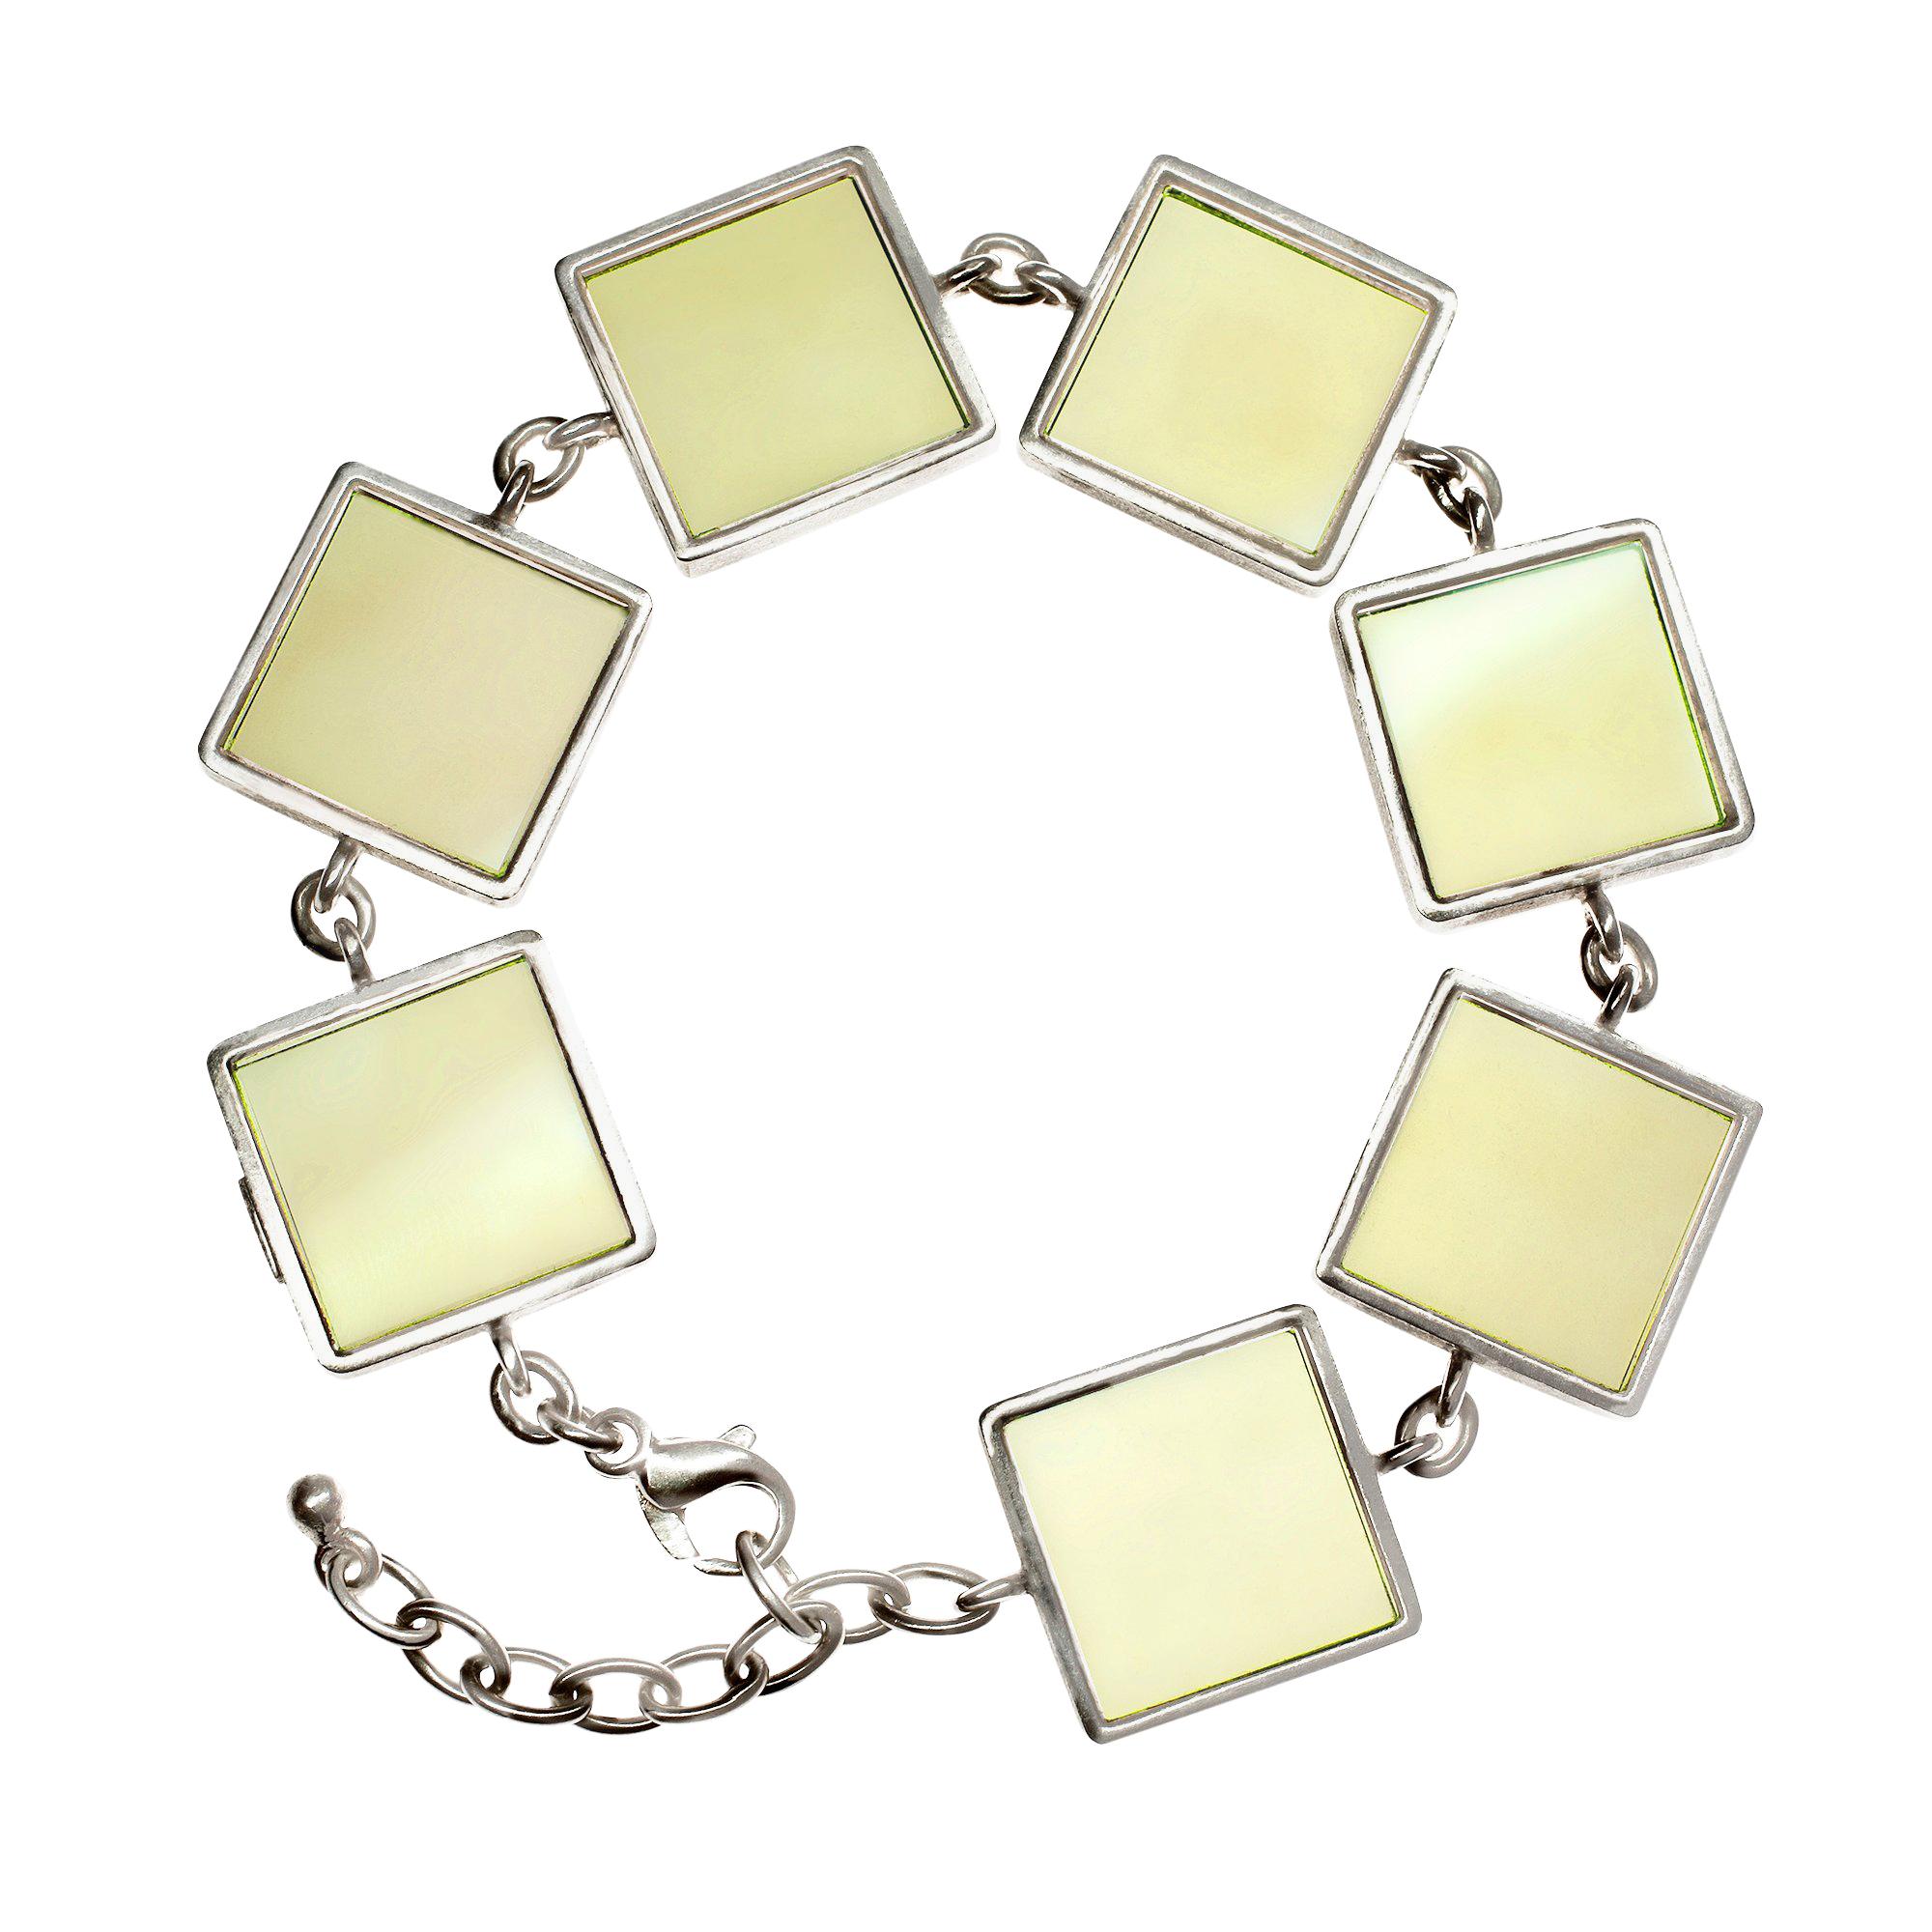 Featured in Vogue Sterling Silver Art Deco Style Bracelet with Lemon Quartzes